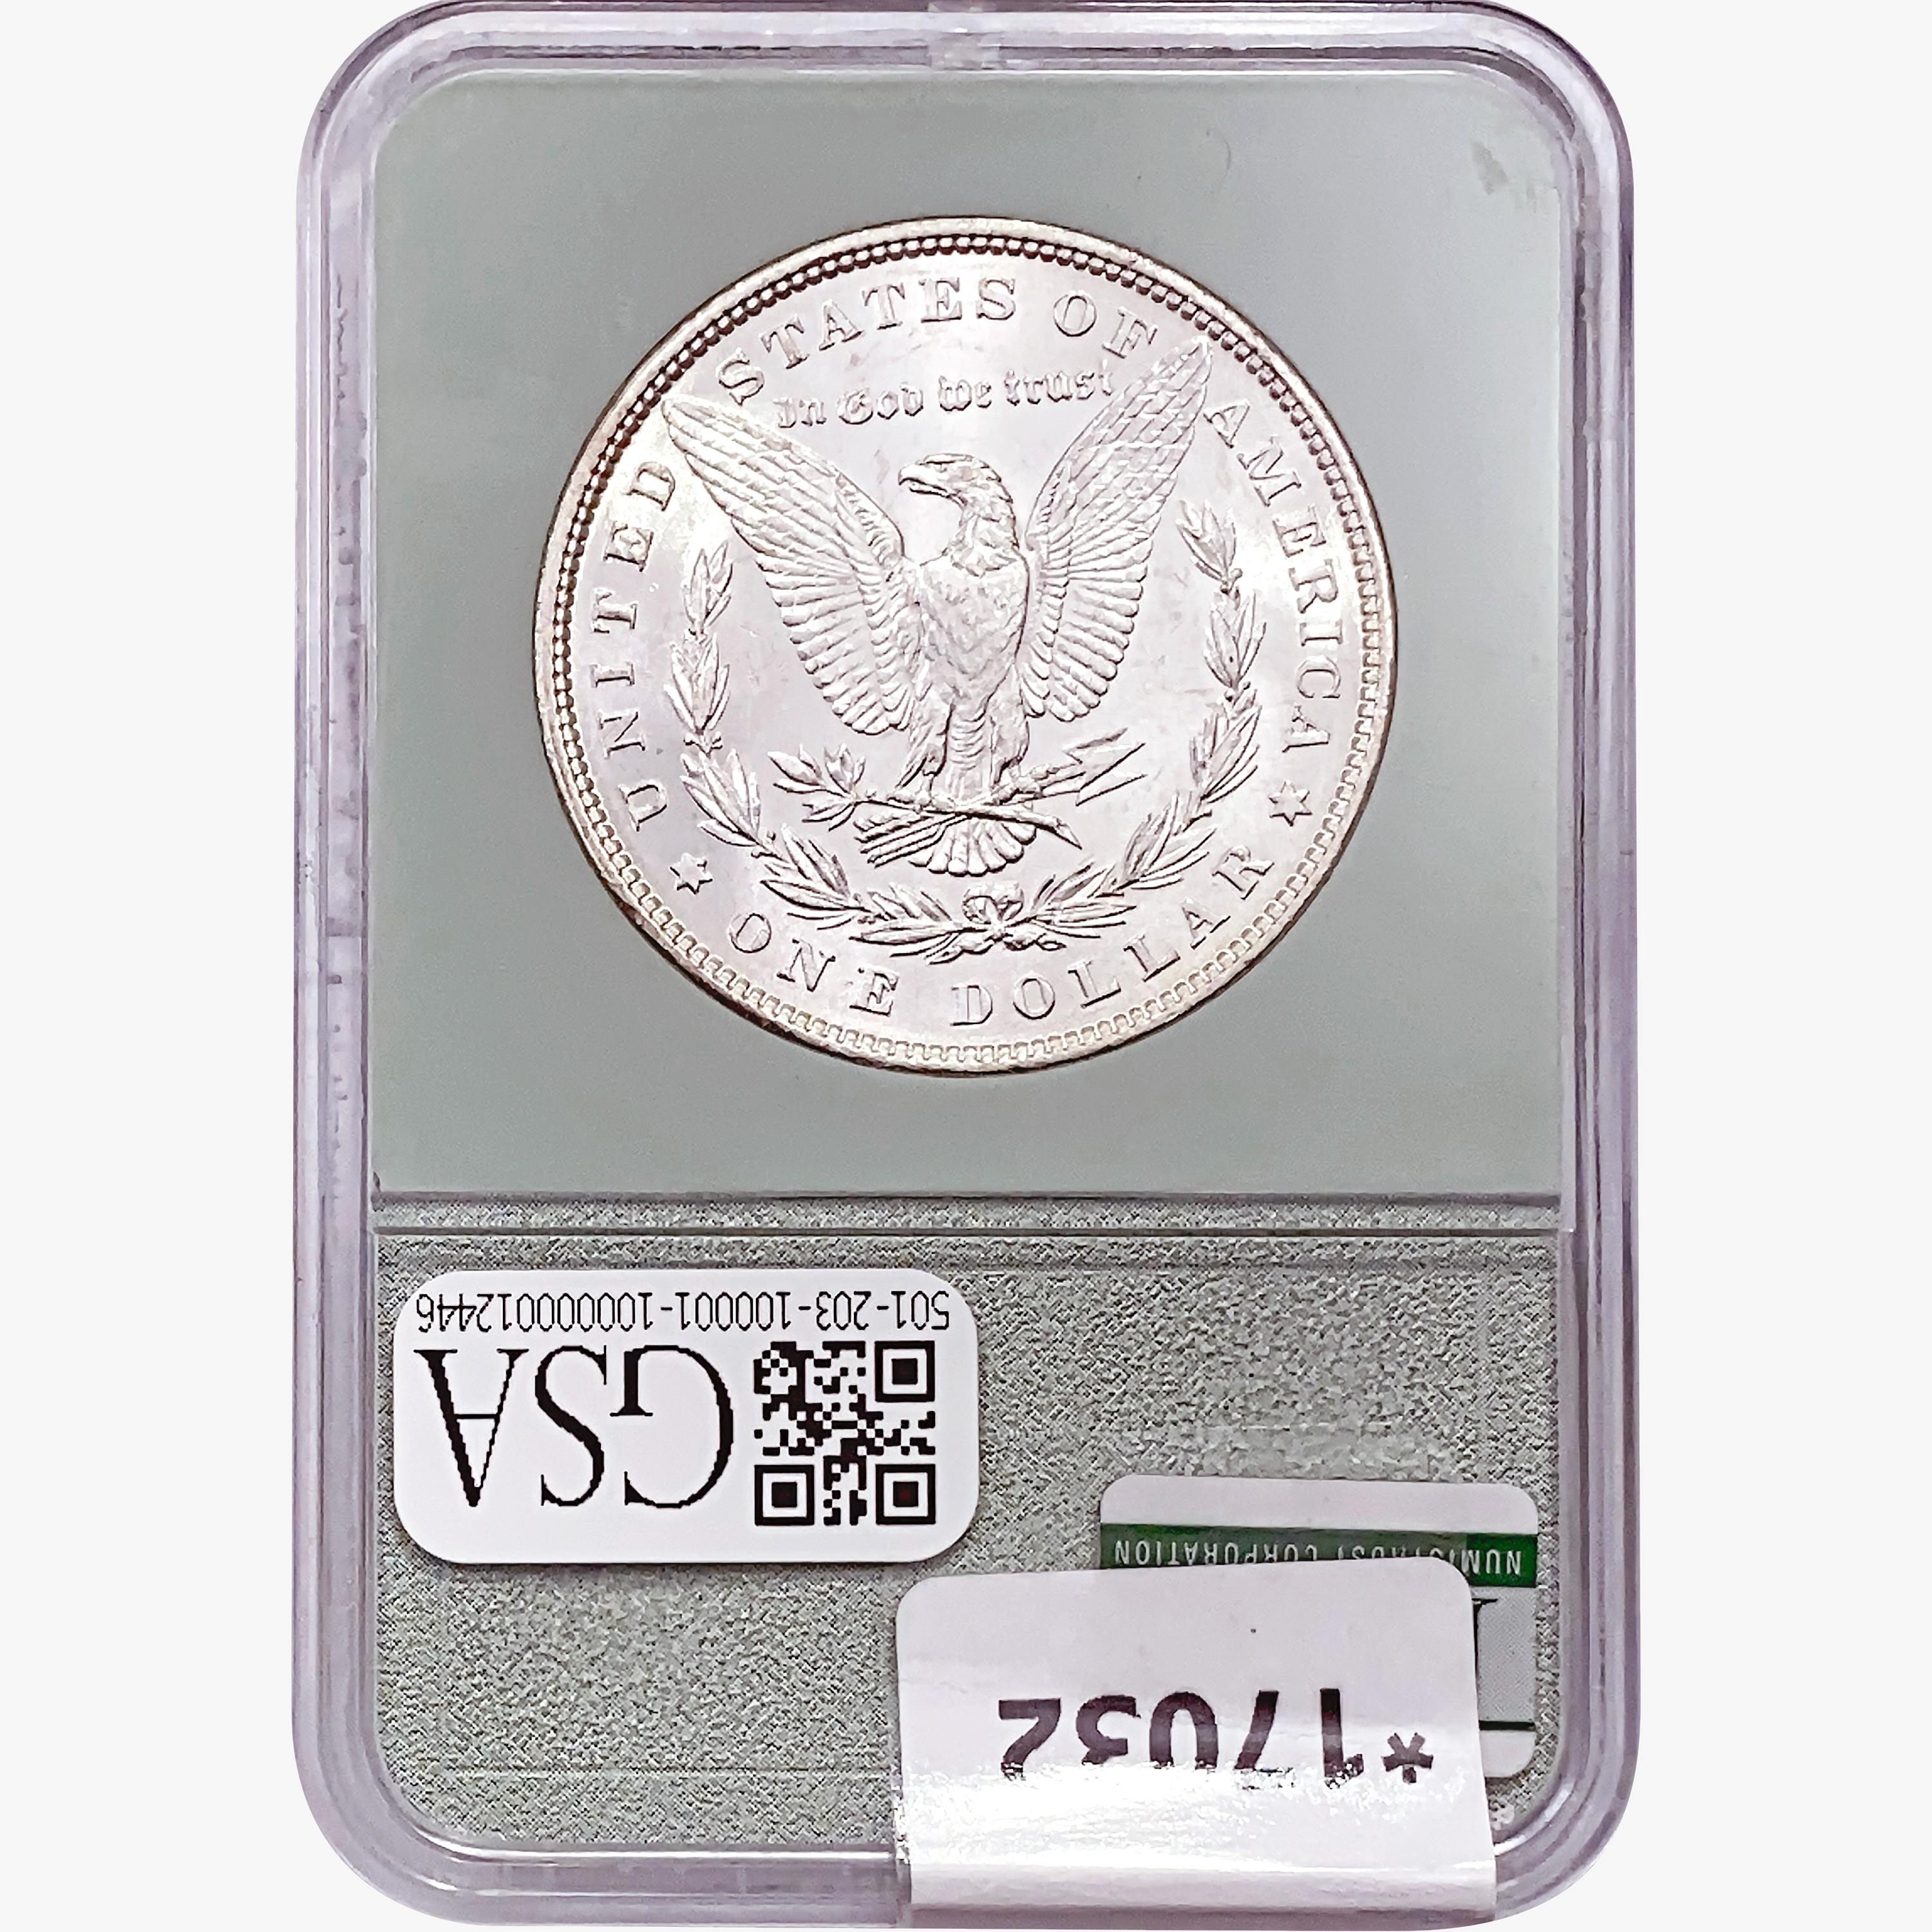 1879 Morgan Silver Dollar NTC MS65